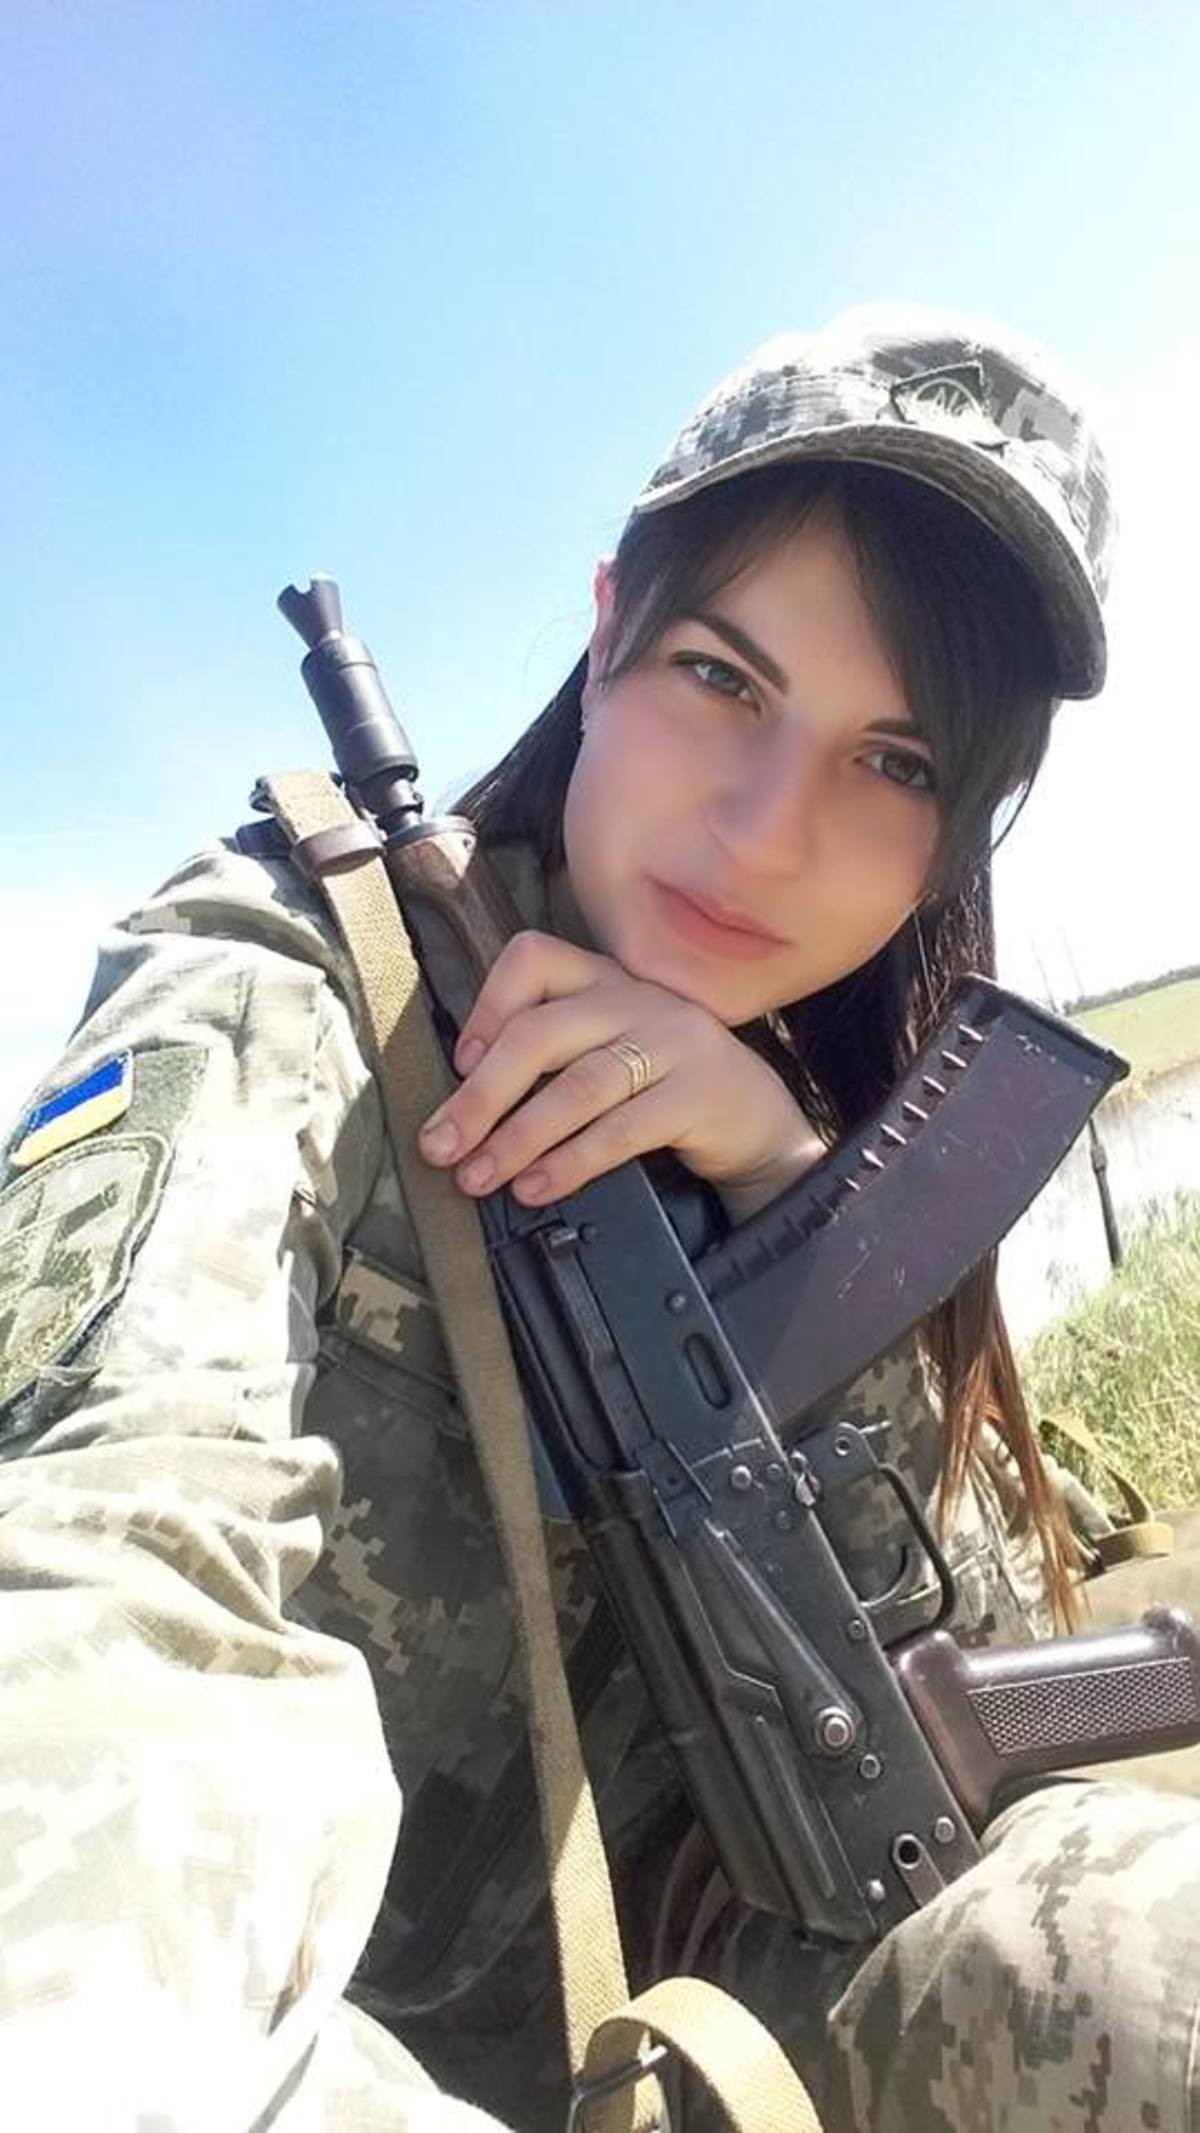 Украина девушки военные. Украинские девушки военные. Украинки в форме. Украинки в военной форме. Украинские девушки солдаты.